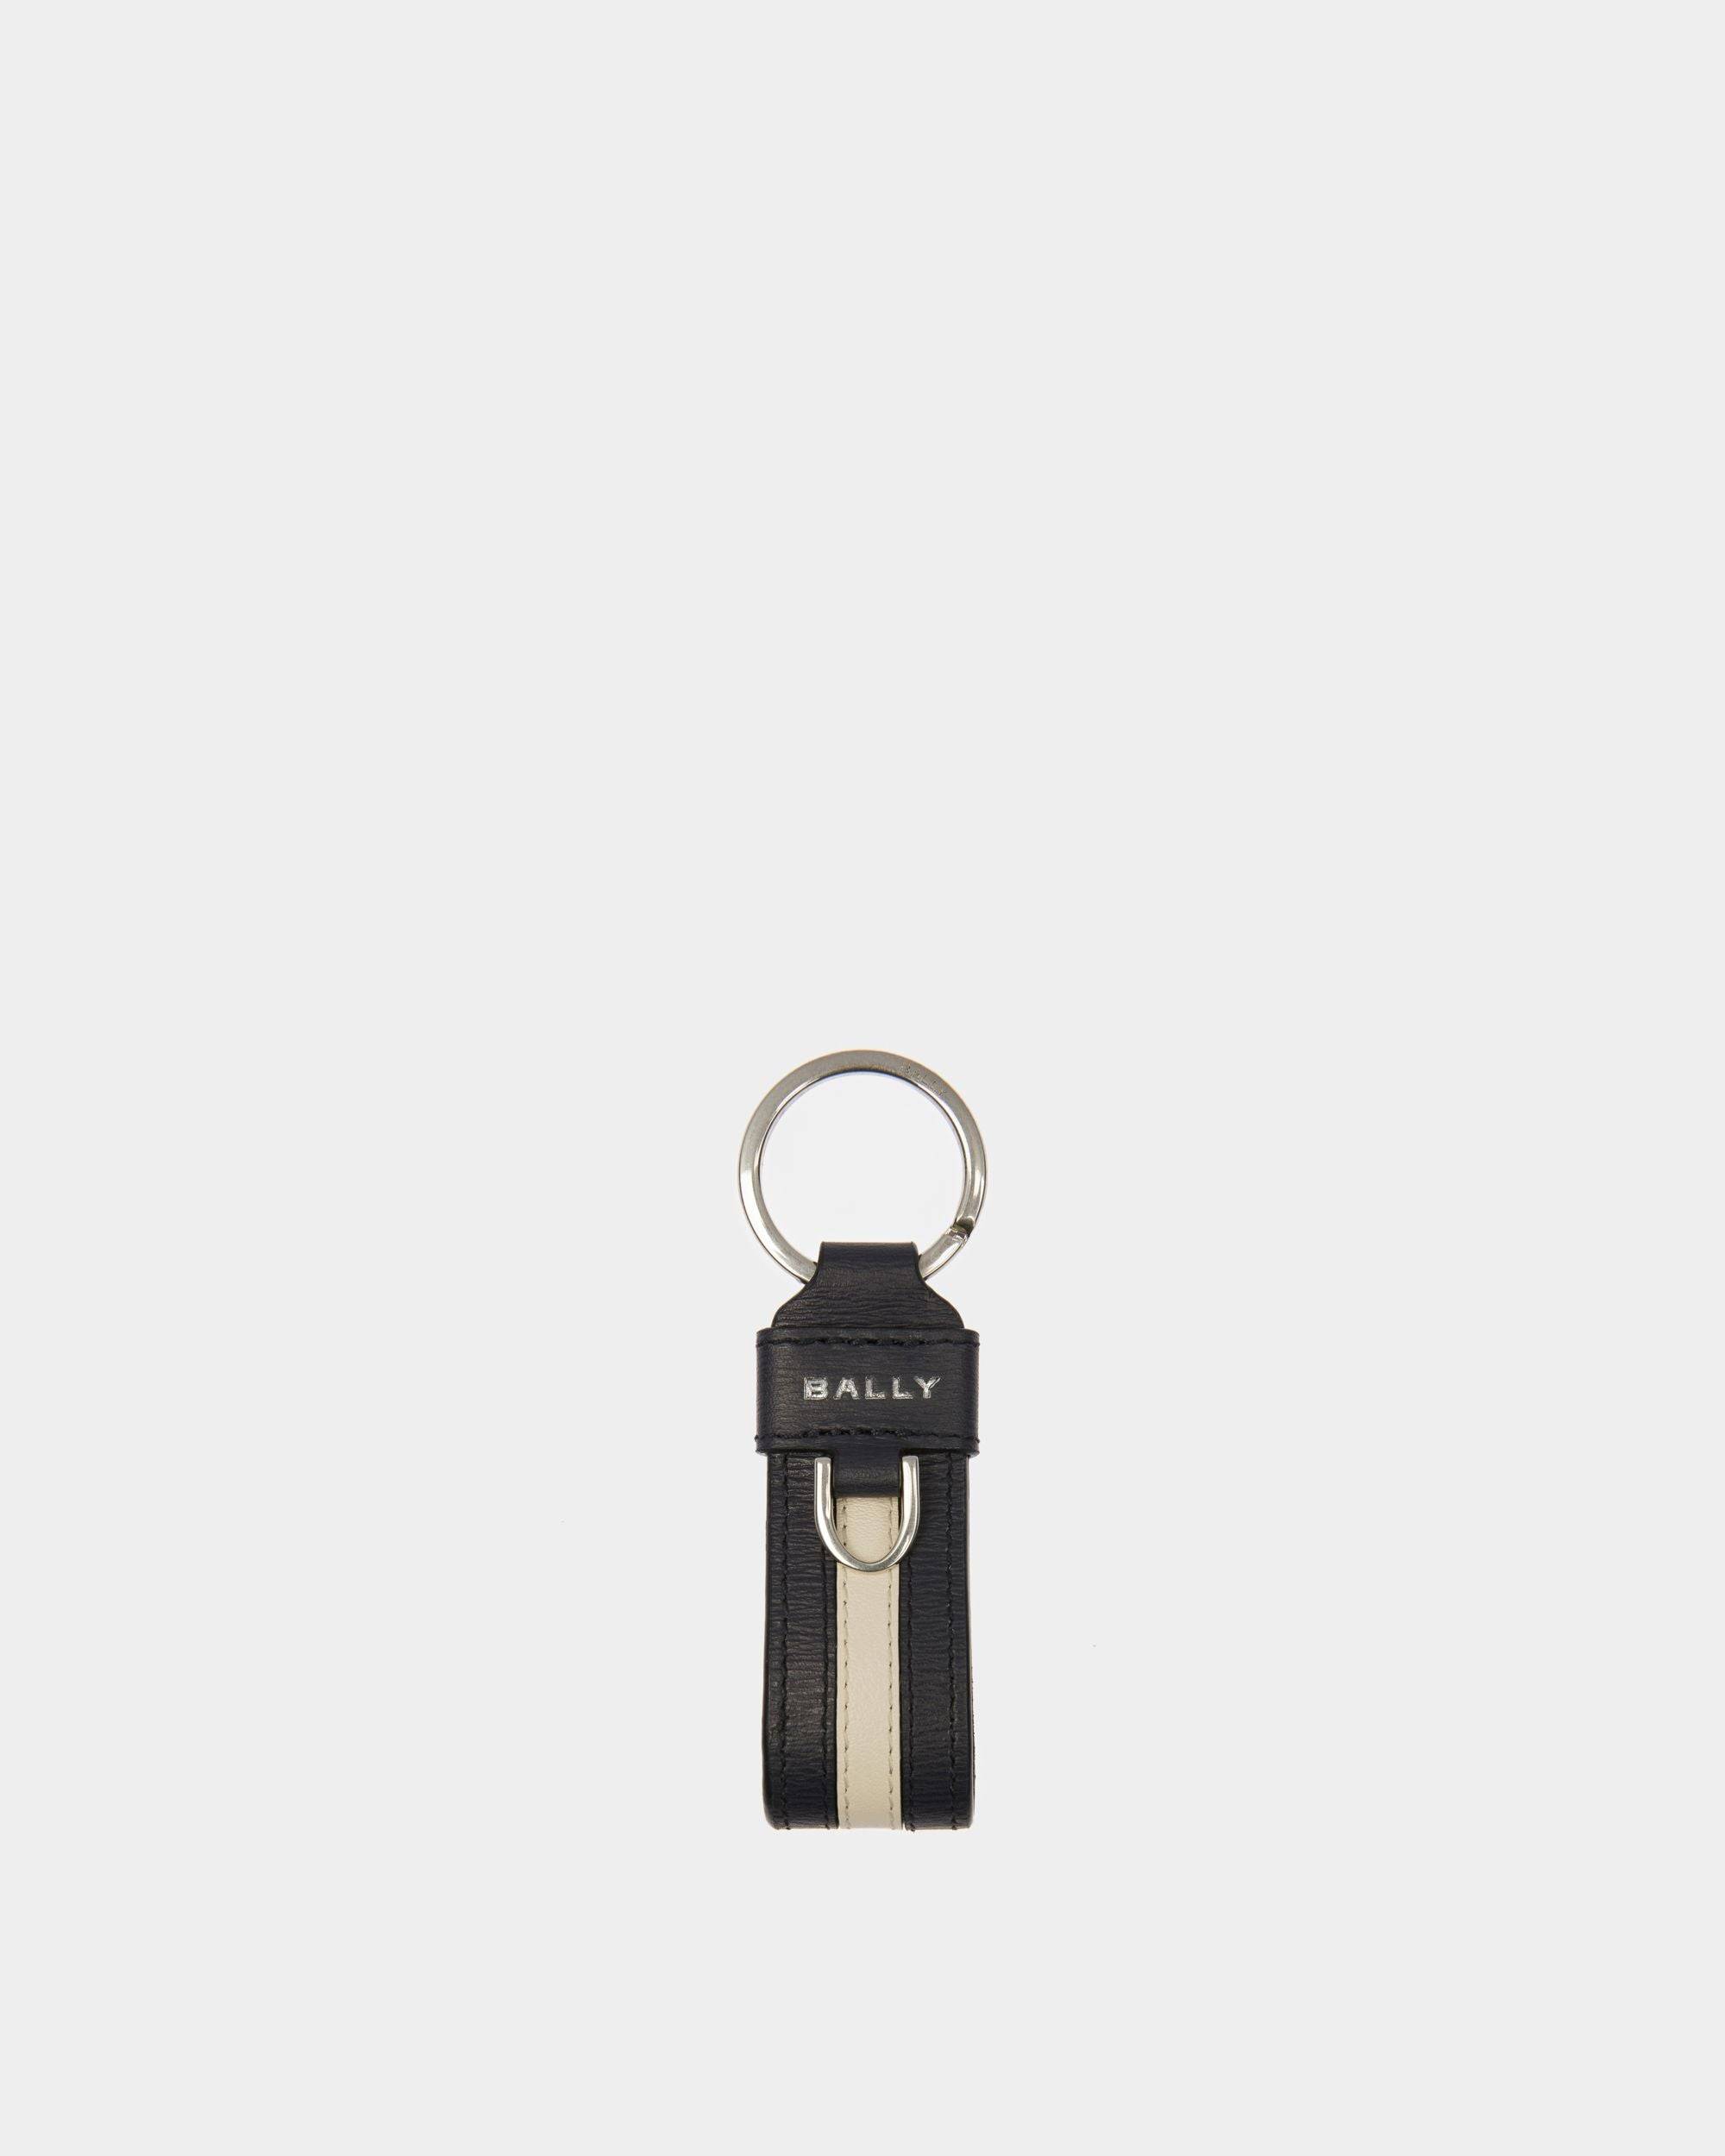 Ribbon Key Holder | Men's Keychain | Midnight Leather | Bally | Still Life Front